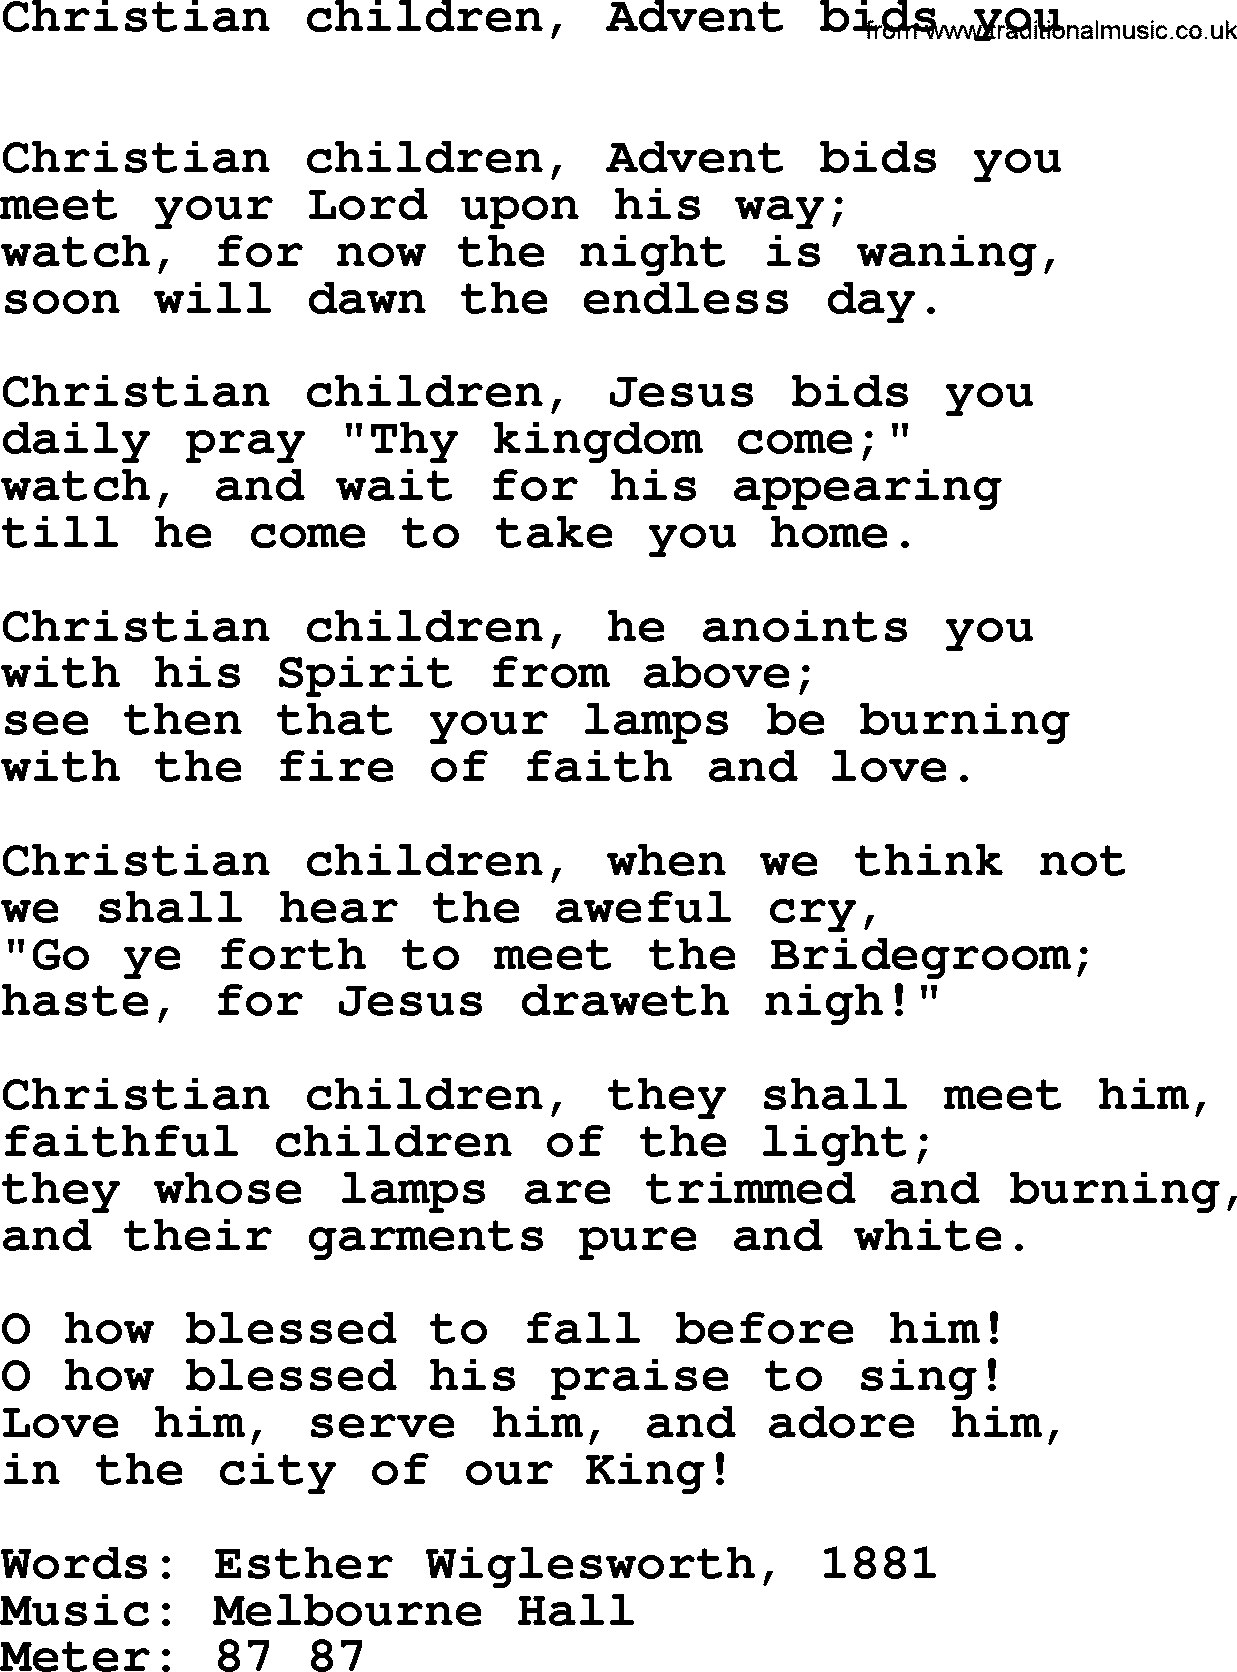 Book of Common Praise Hymn: Christian Children, Advent Bids You.txt lyrics with midi music